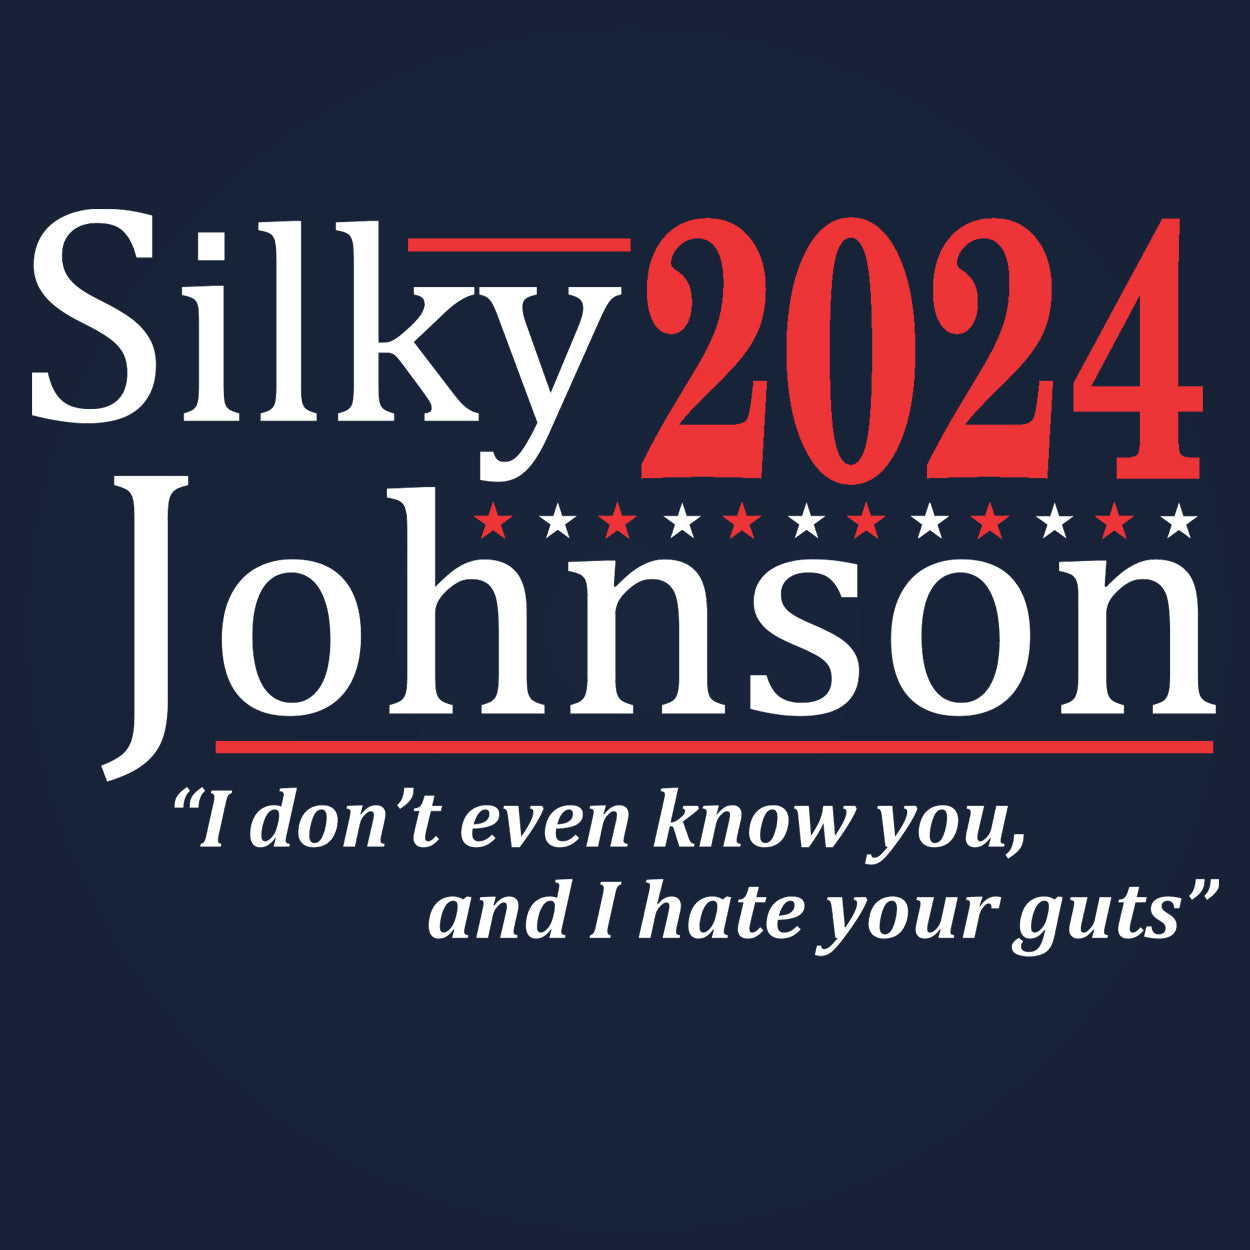 Silky Johnson 2024 Election Tshirt - Donkey Tees